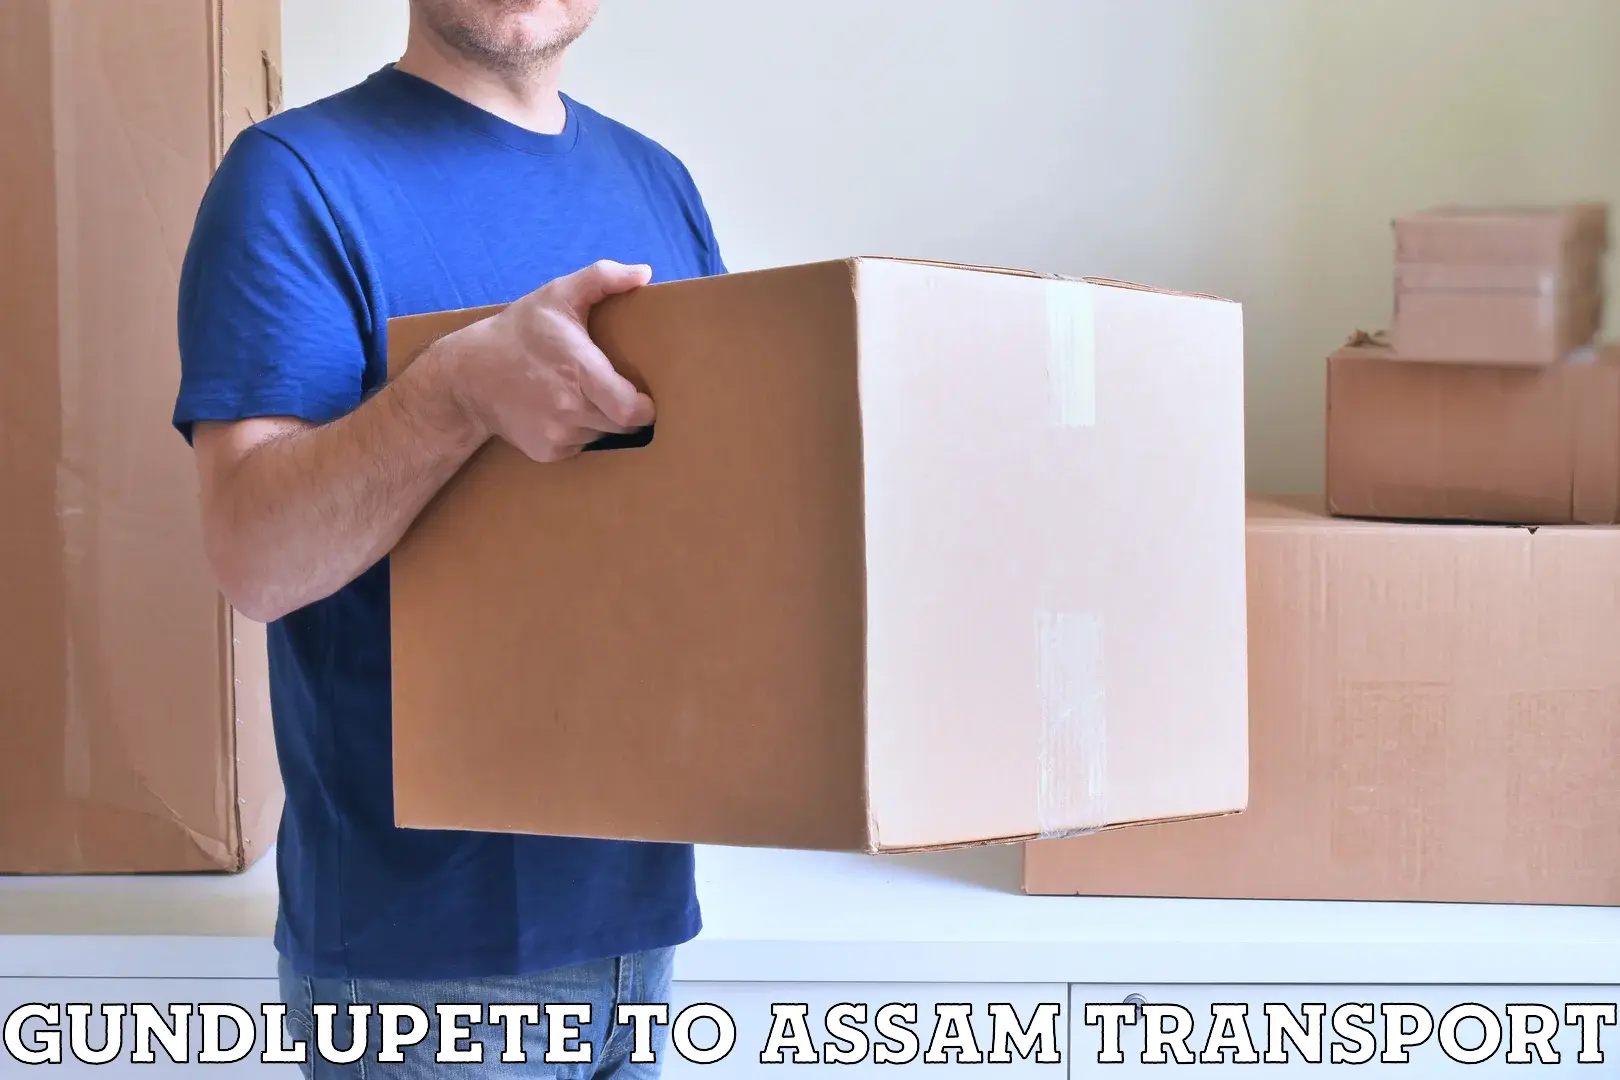 Express transport services Gundlupete to Lala Assam